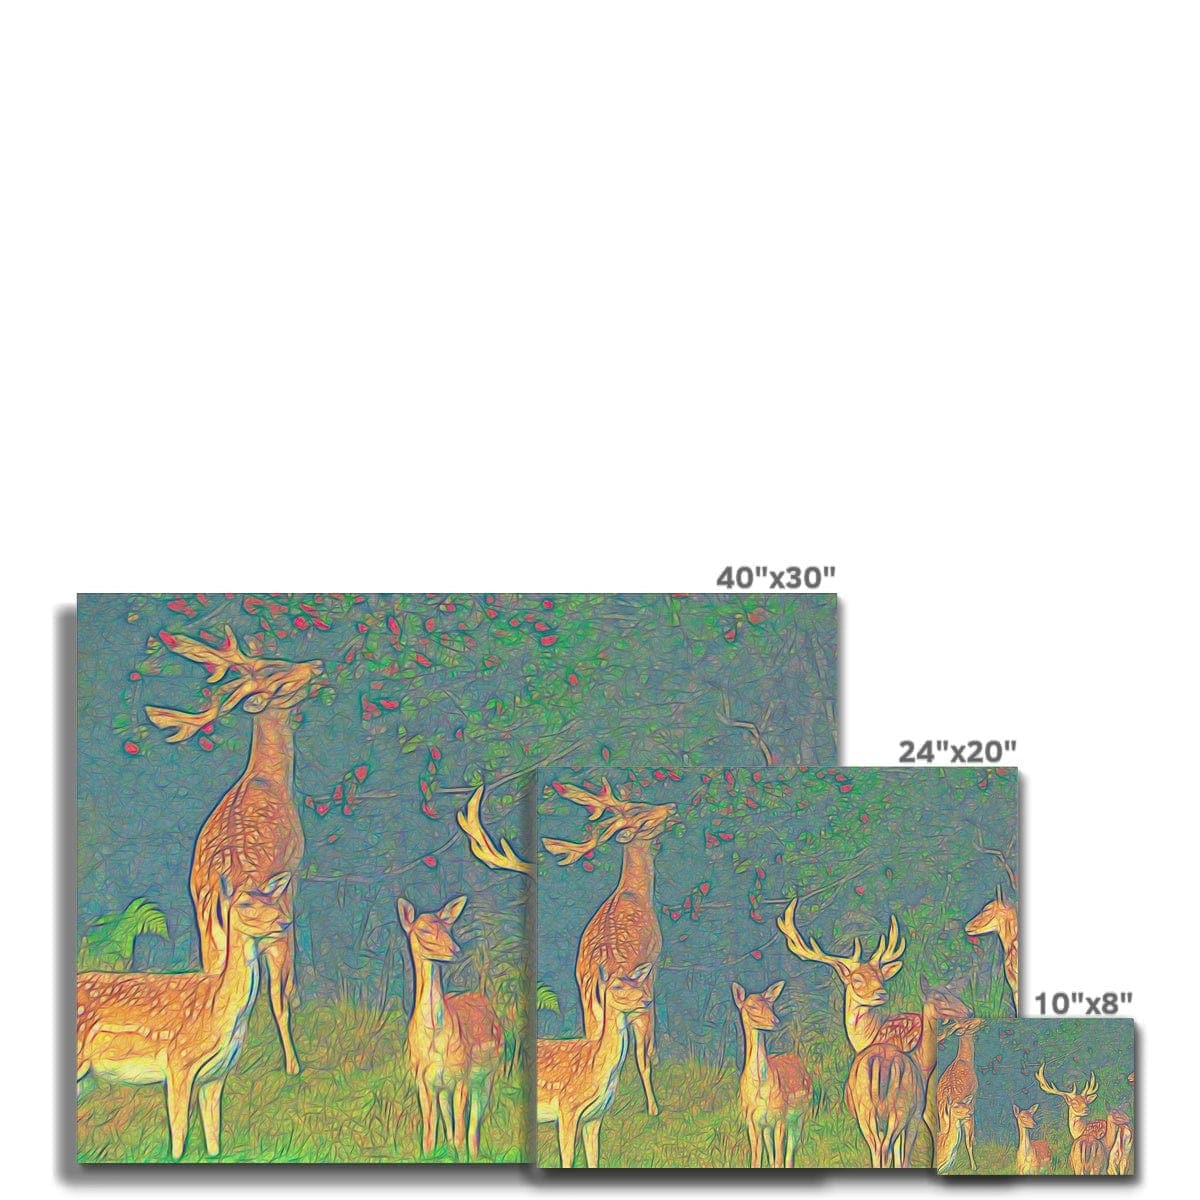 Deer pack in the forest, Canvas, by Ingrid Hütten